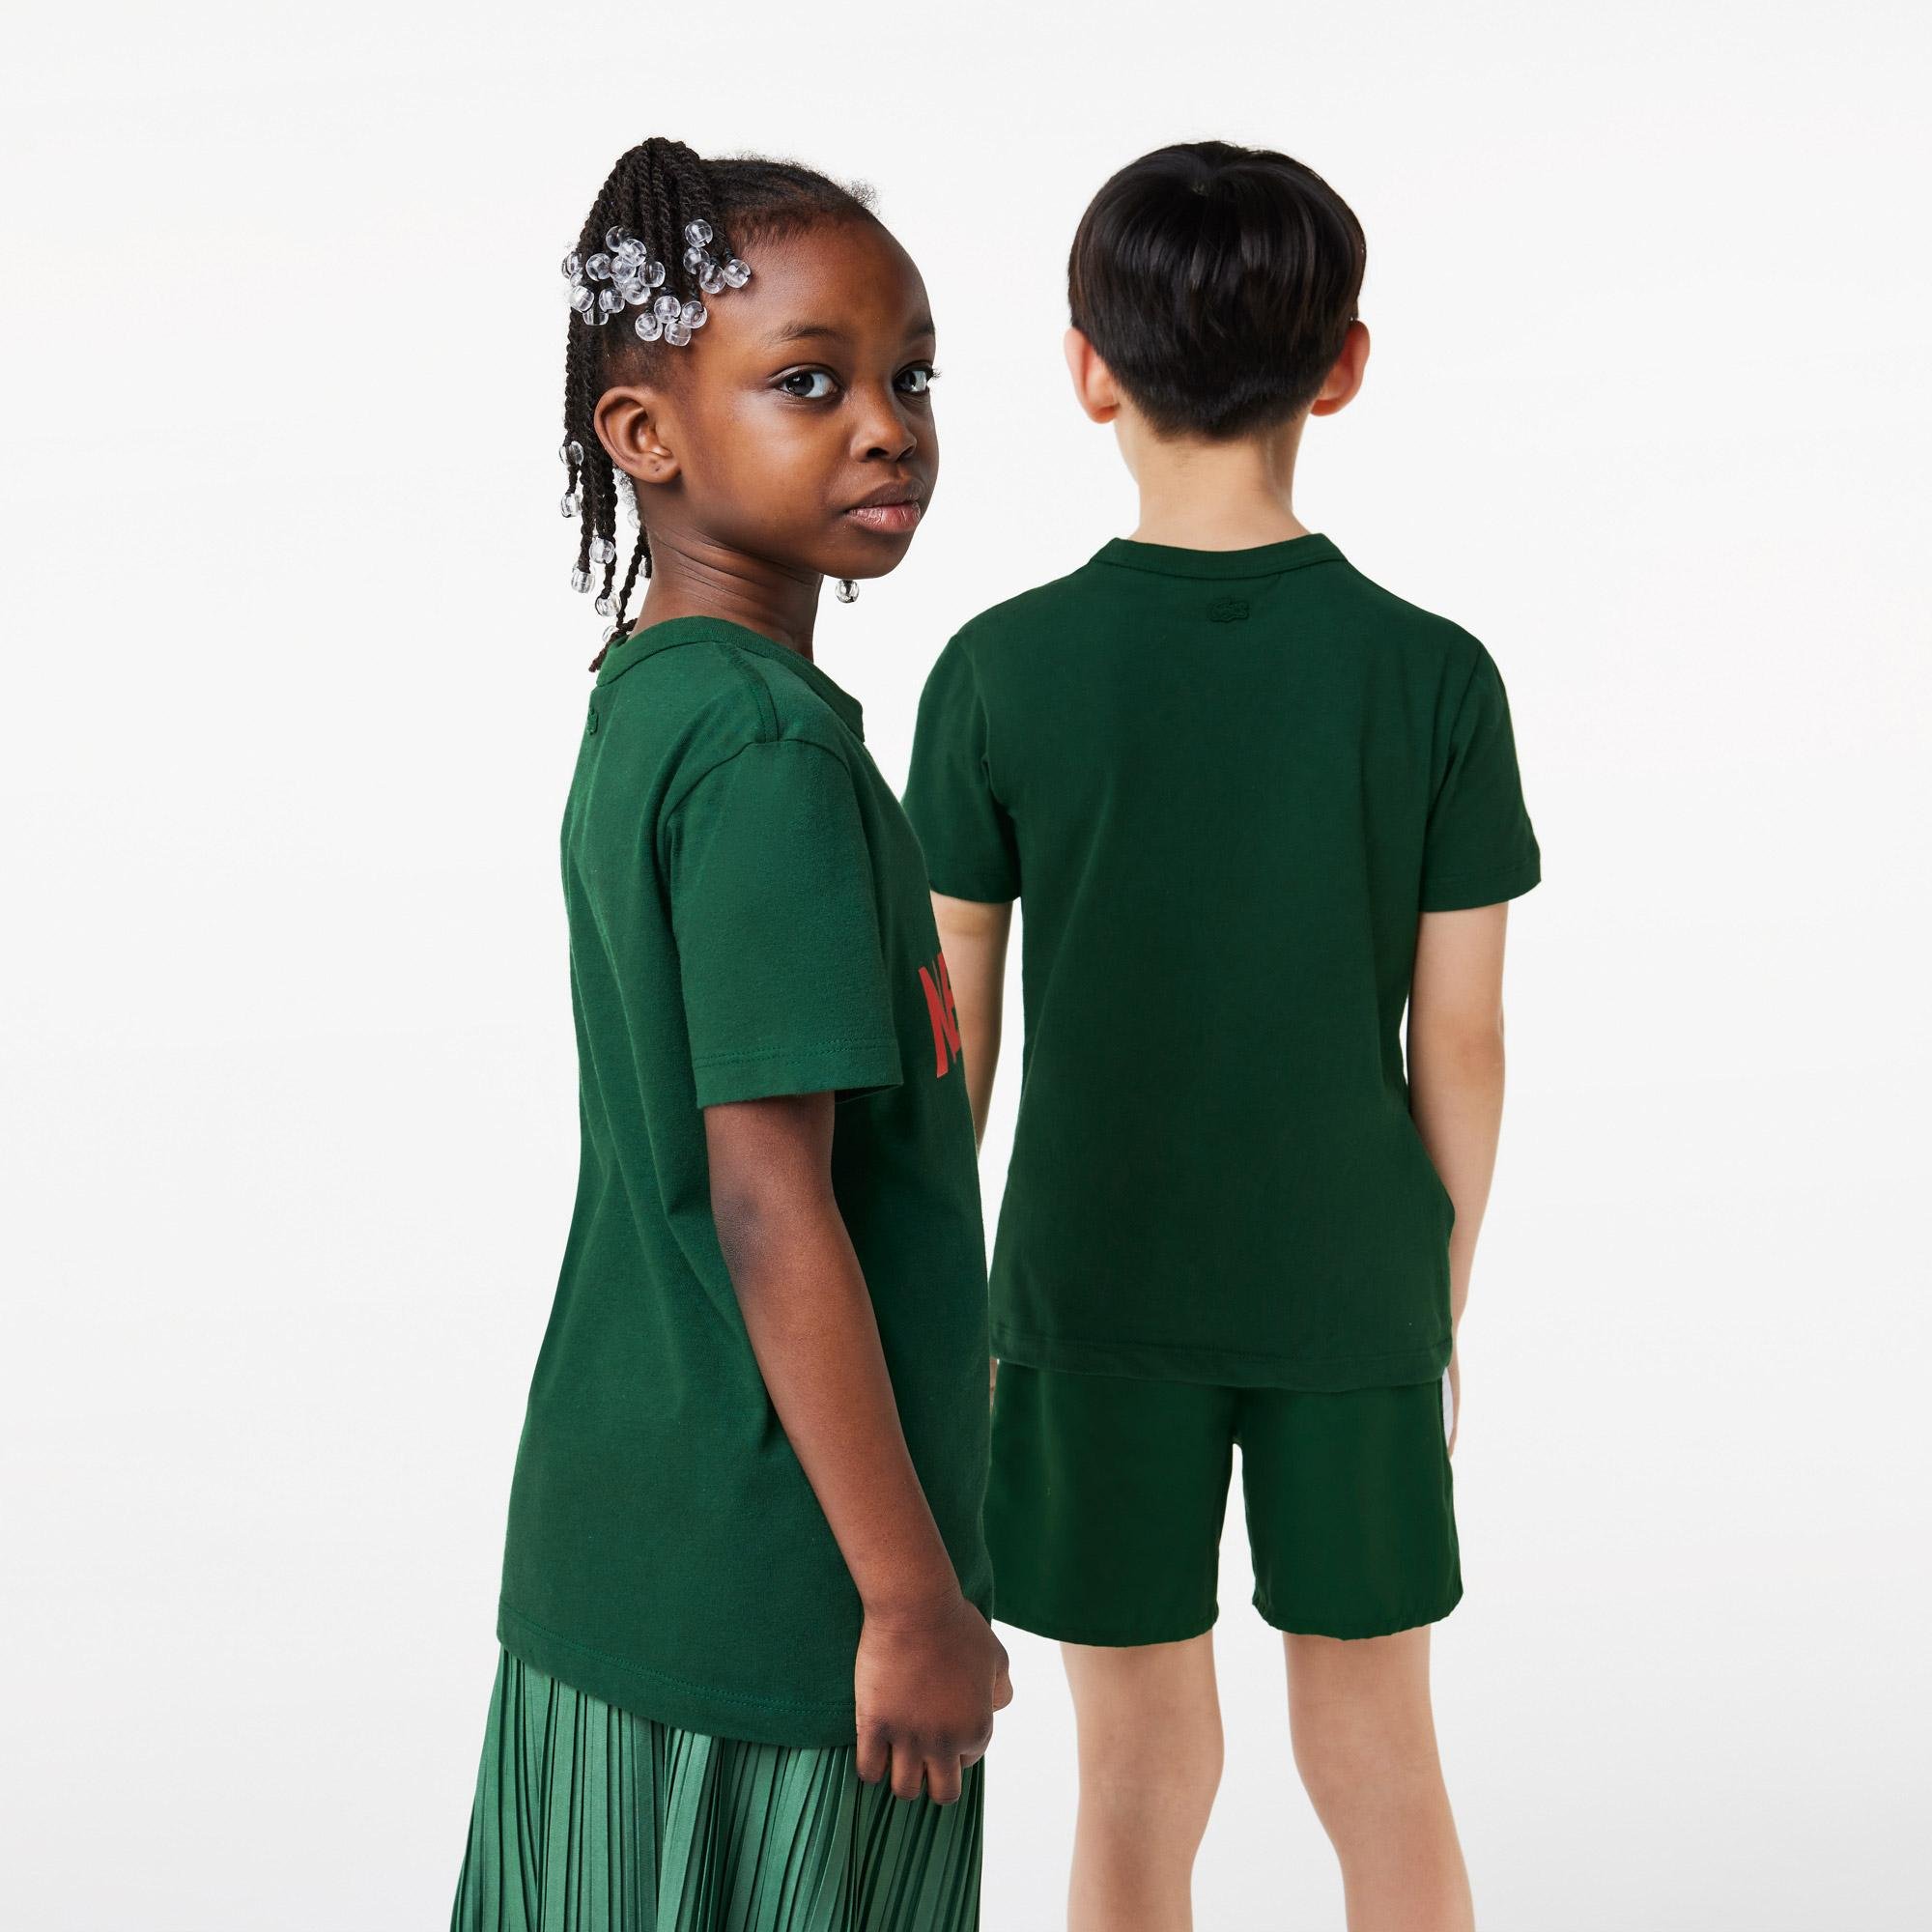 Tričko Lacoste Kids' x Netflix z organickej bavlny s potlačou